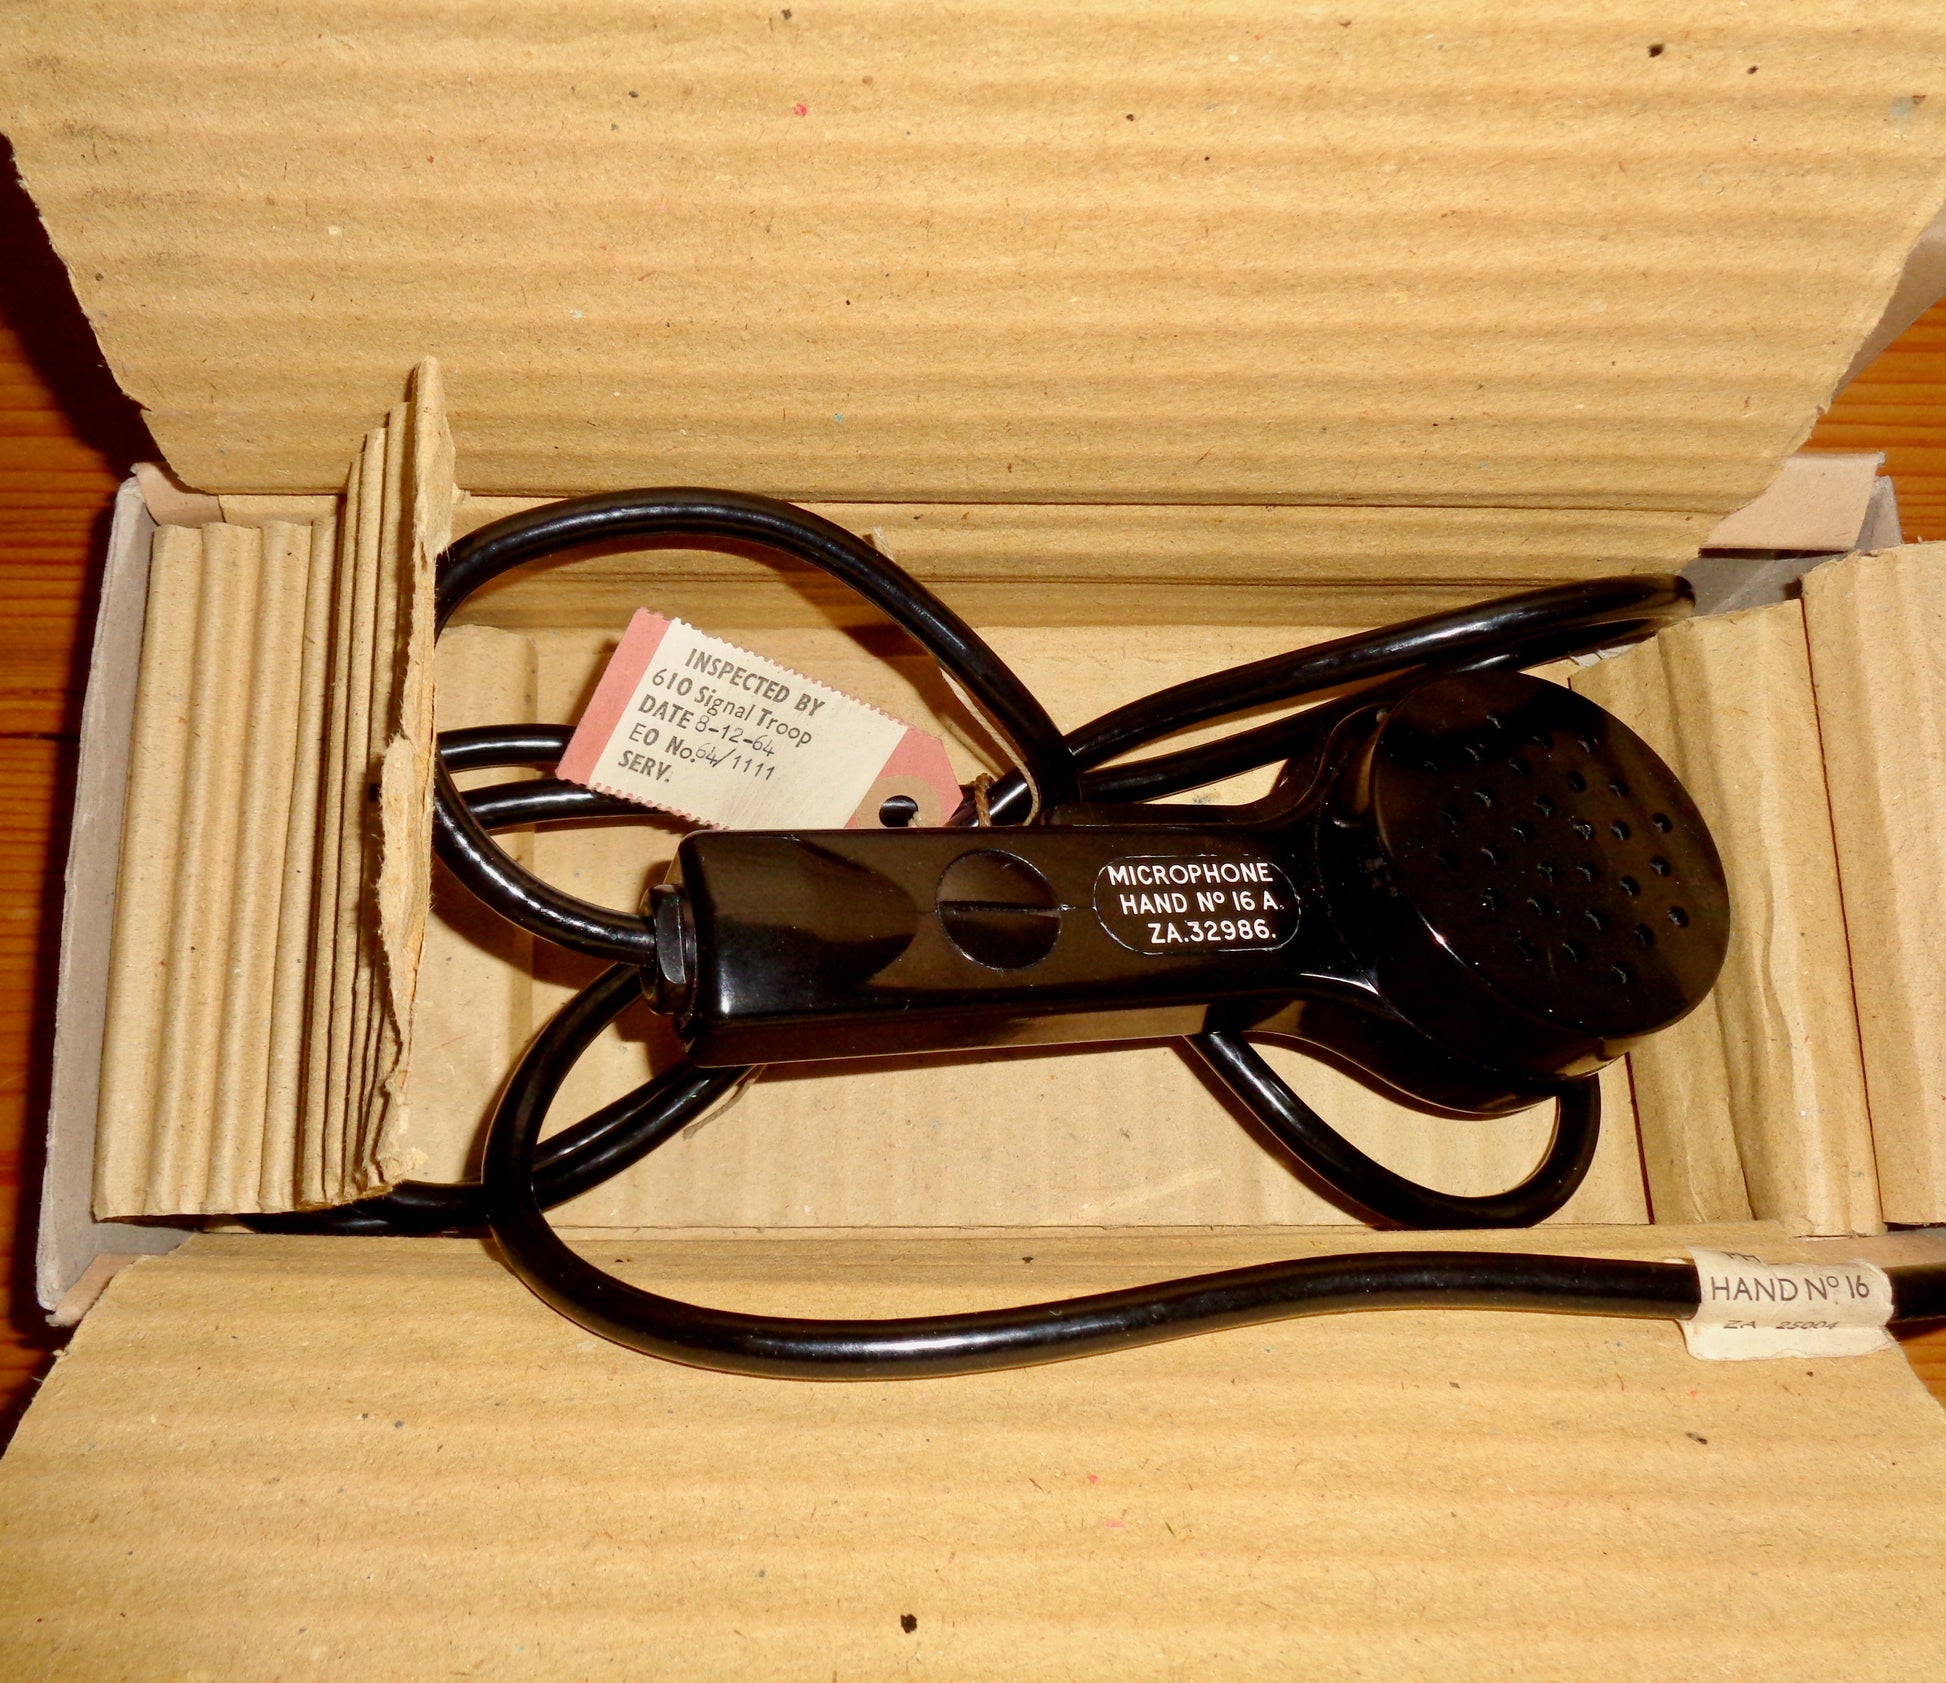 1960s Military Type 16A Bakelite Microphone Hand Set ZA 32986. New Old Stock